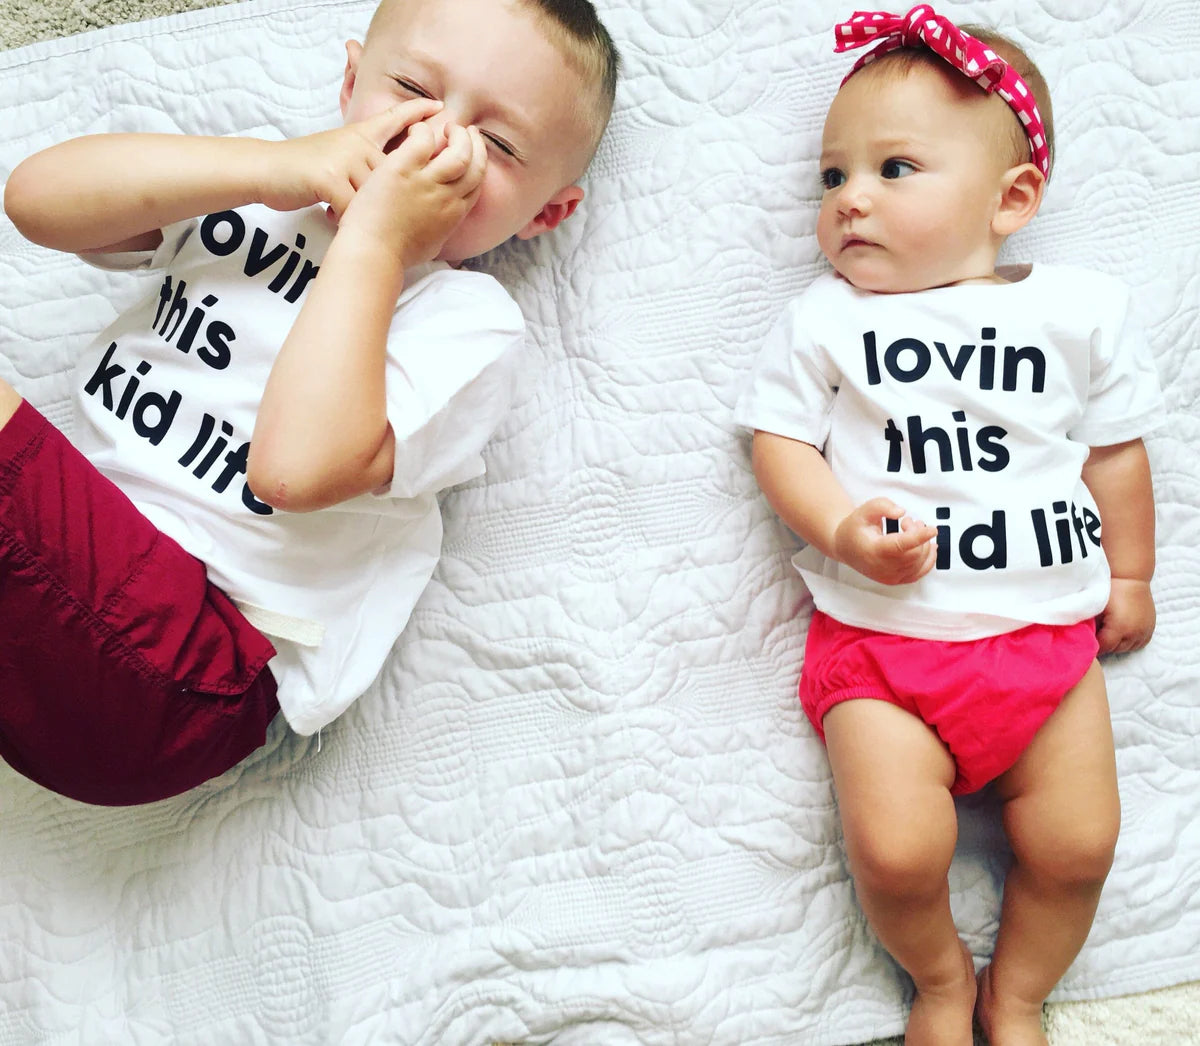 Toddler matching shirts that say, “Lovin’ this kid life”